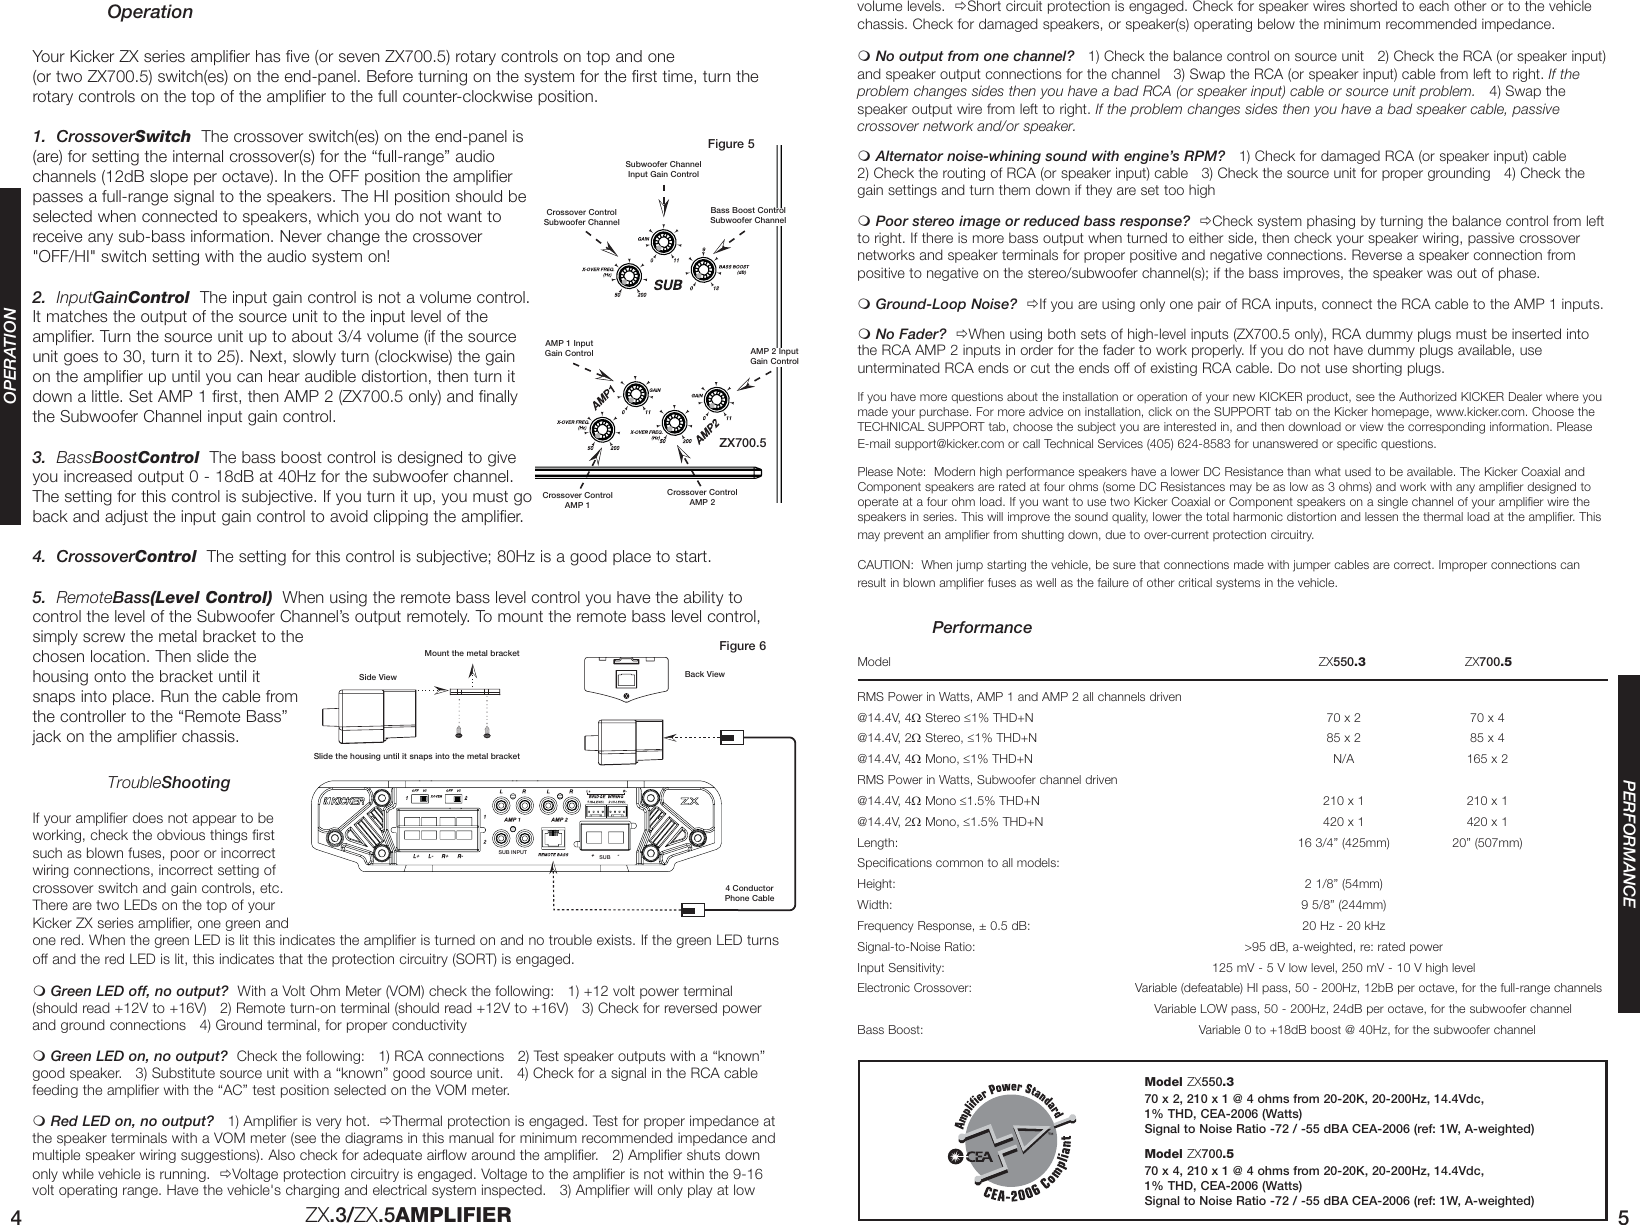 Page 3 of 4 - Kicker Kicker-Zx-Series-Zx700-5-Users-Manual- TEMP 2006 ZX550-3 700-5 4in1 A01.qxp  Kicker-zx-series-zx700-5-users-manual